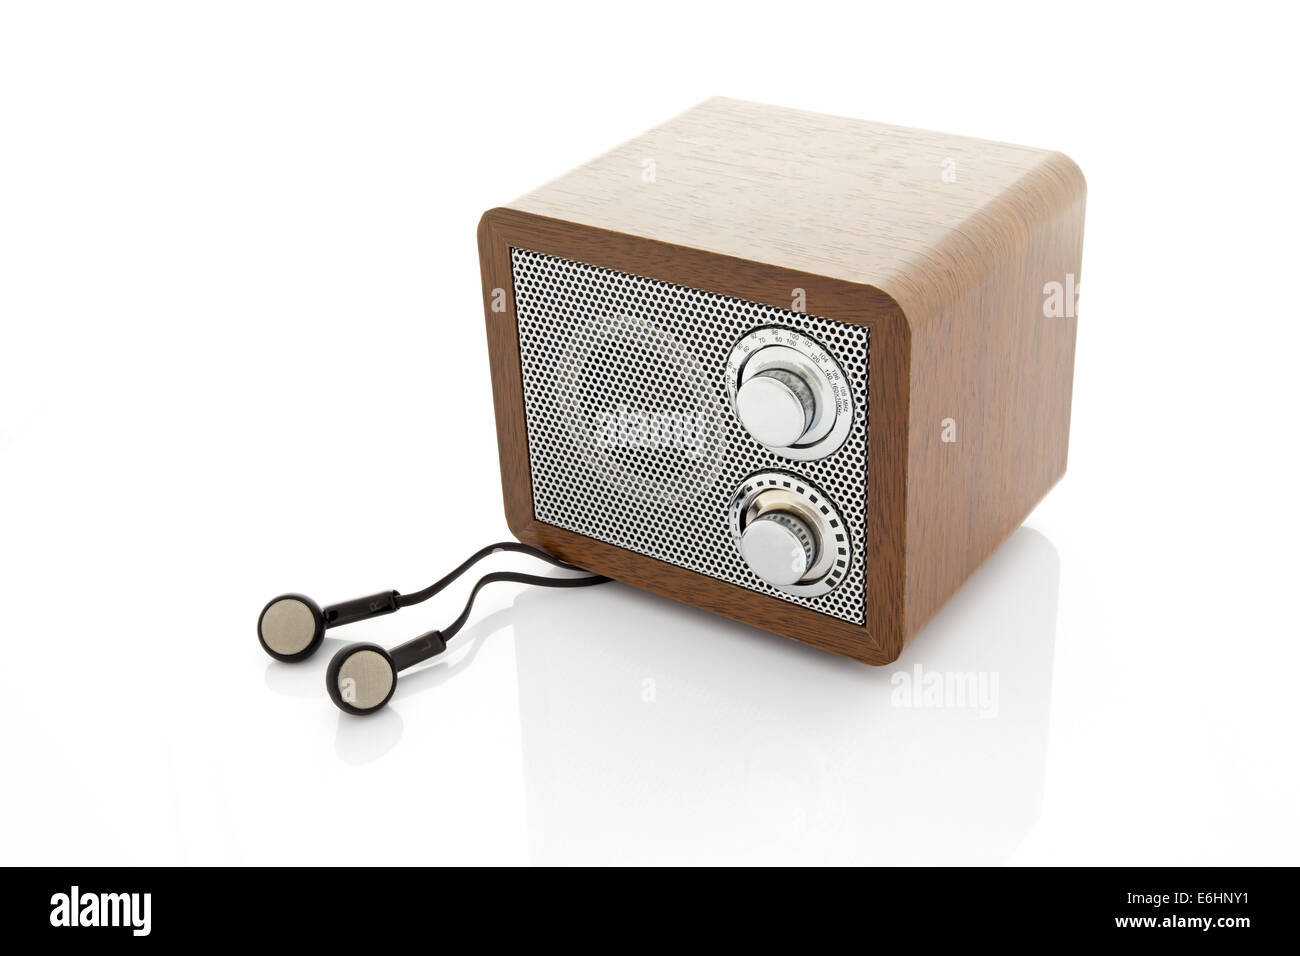 Retro style mini radio player isolated on white background Stock Photo